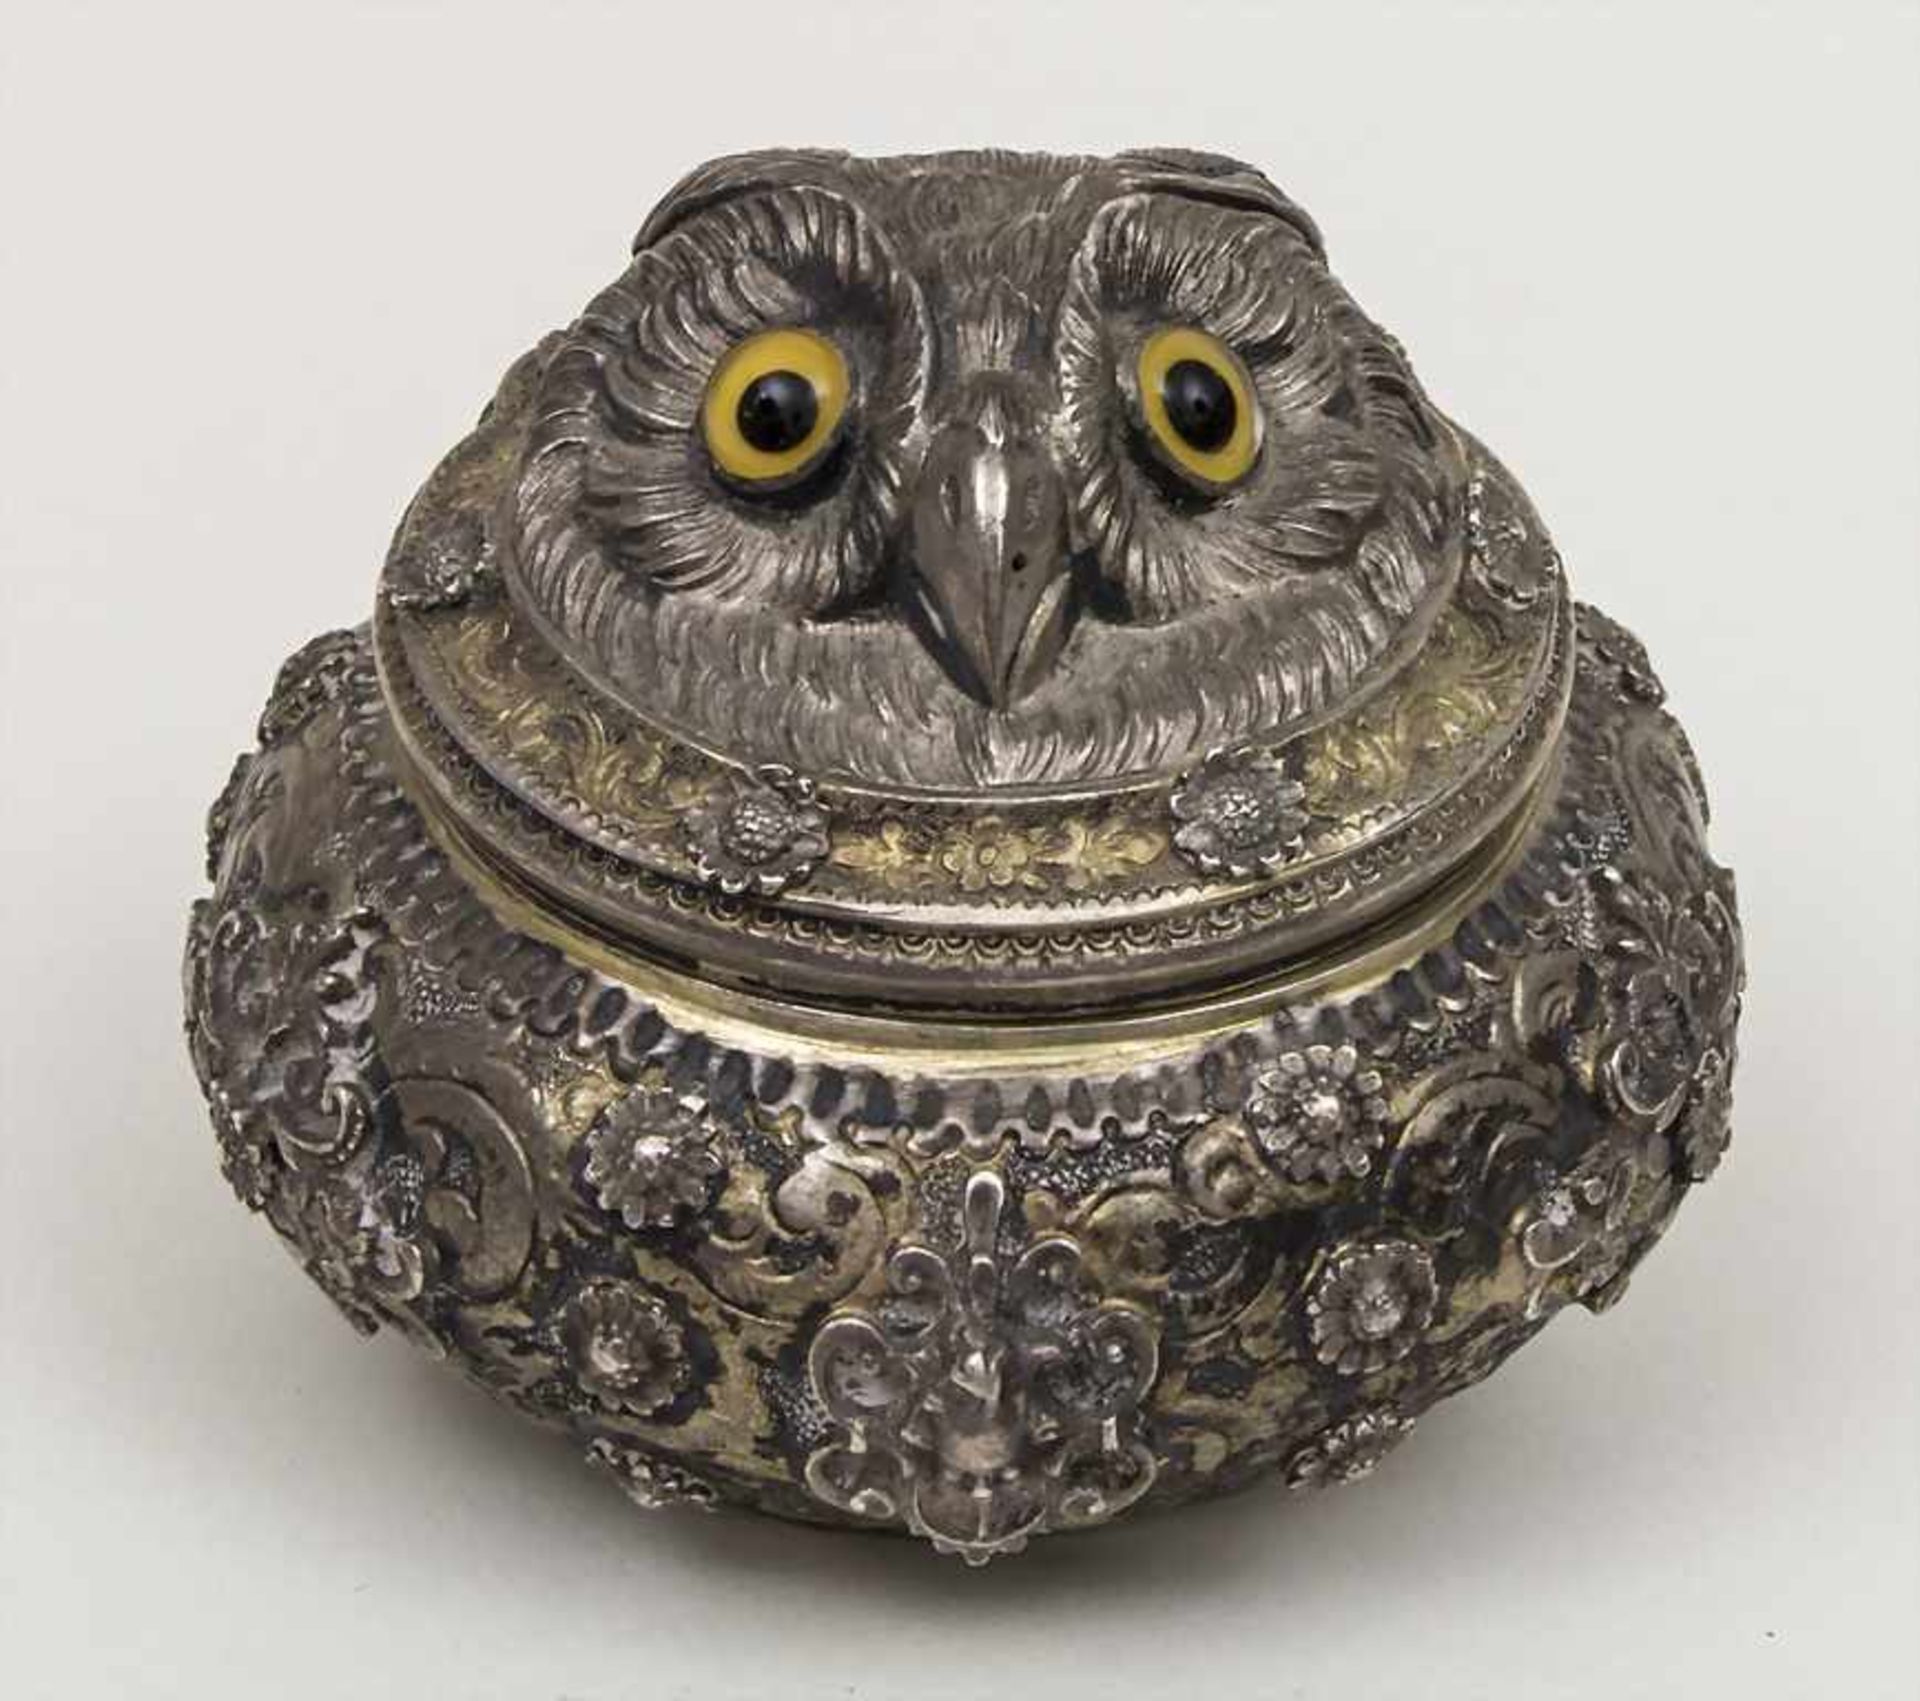 Zierdose mit Eulenkopf / A decorative lidded box with owl head, 19. Jh. Material: Silber, innen